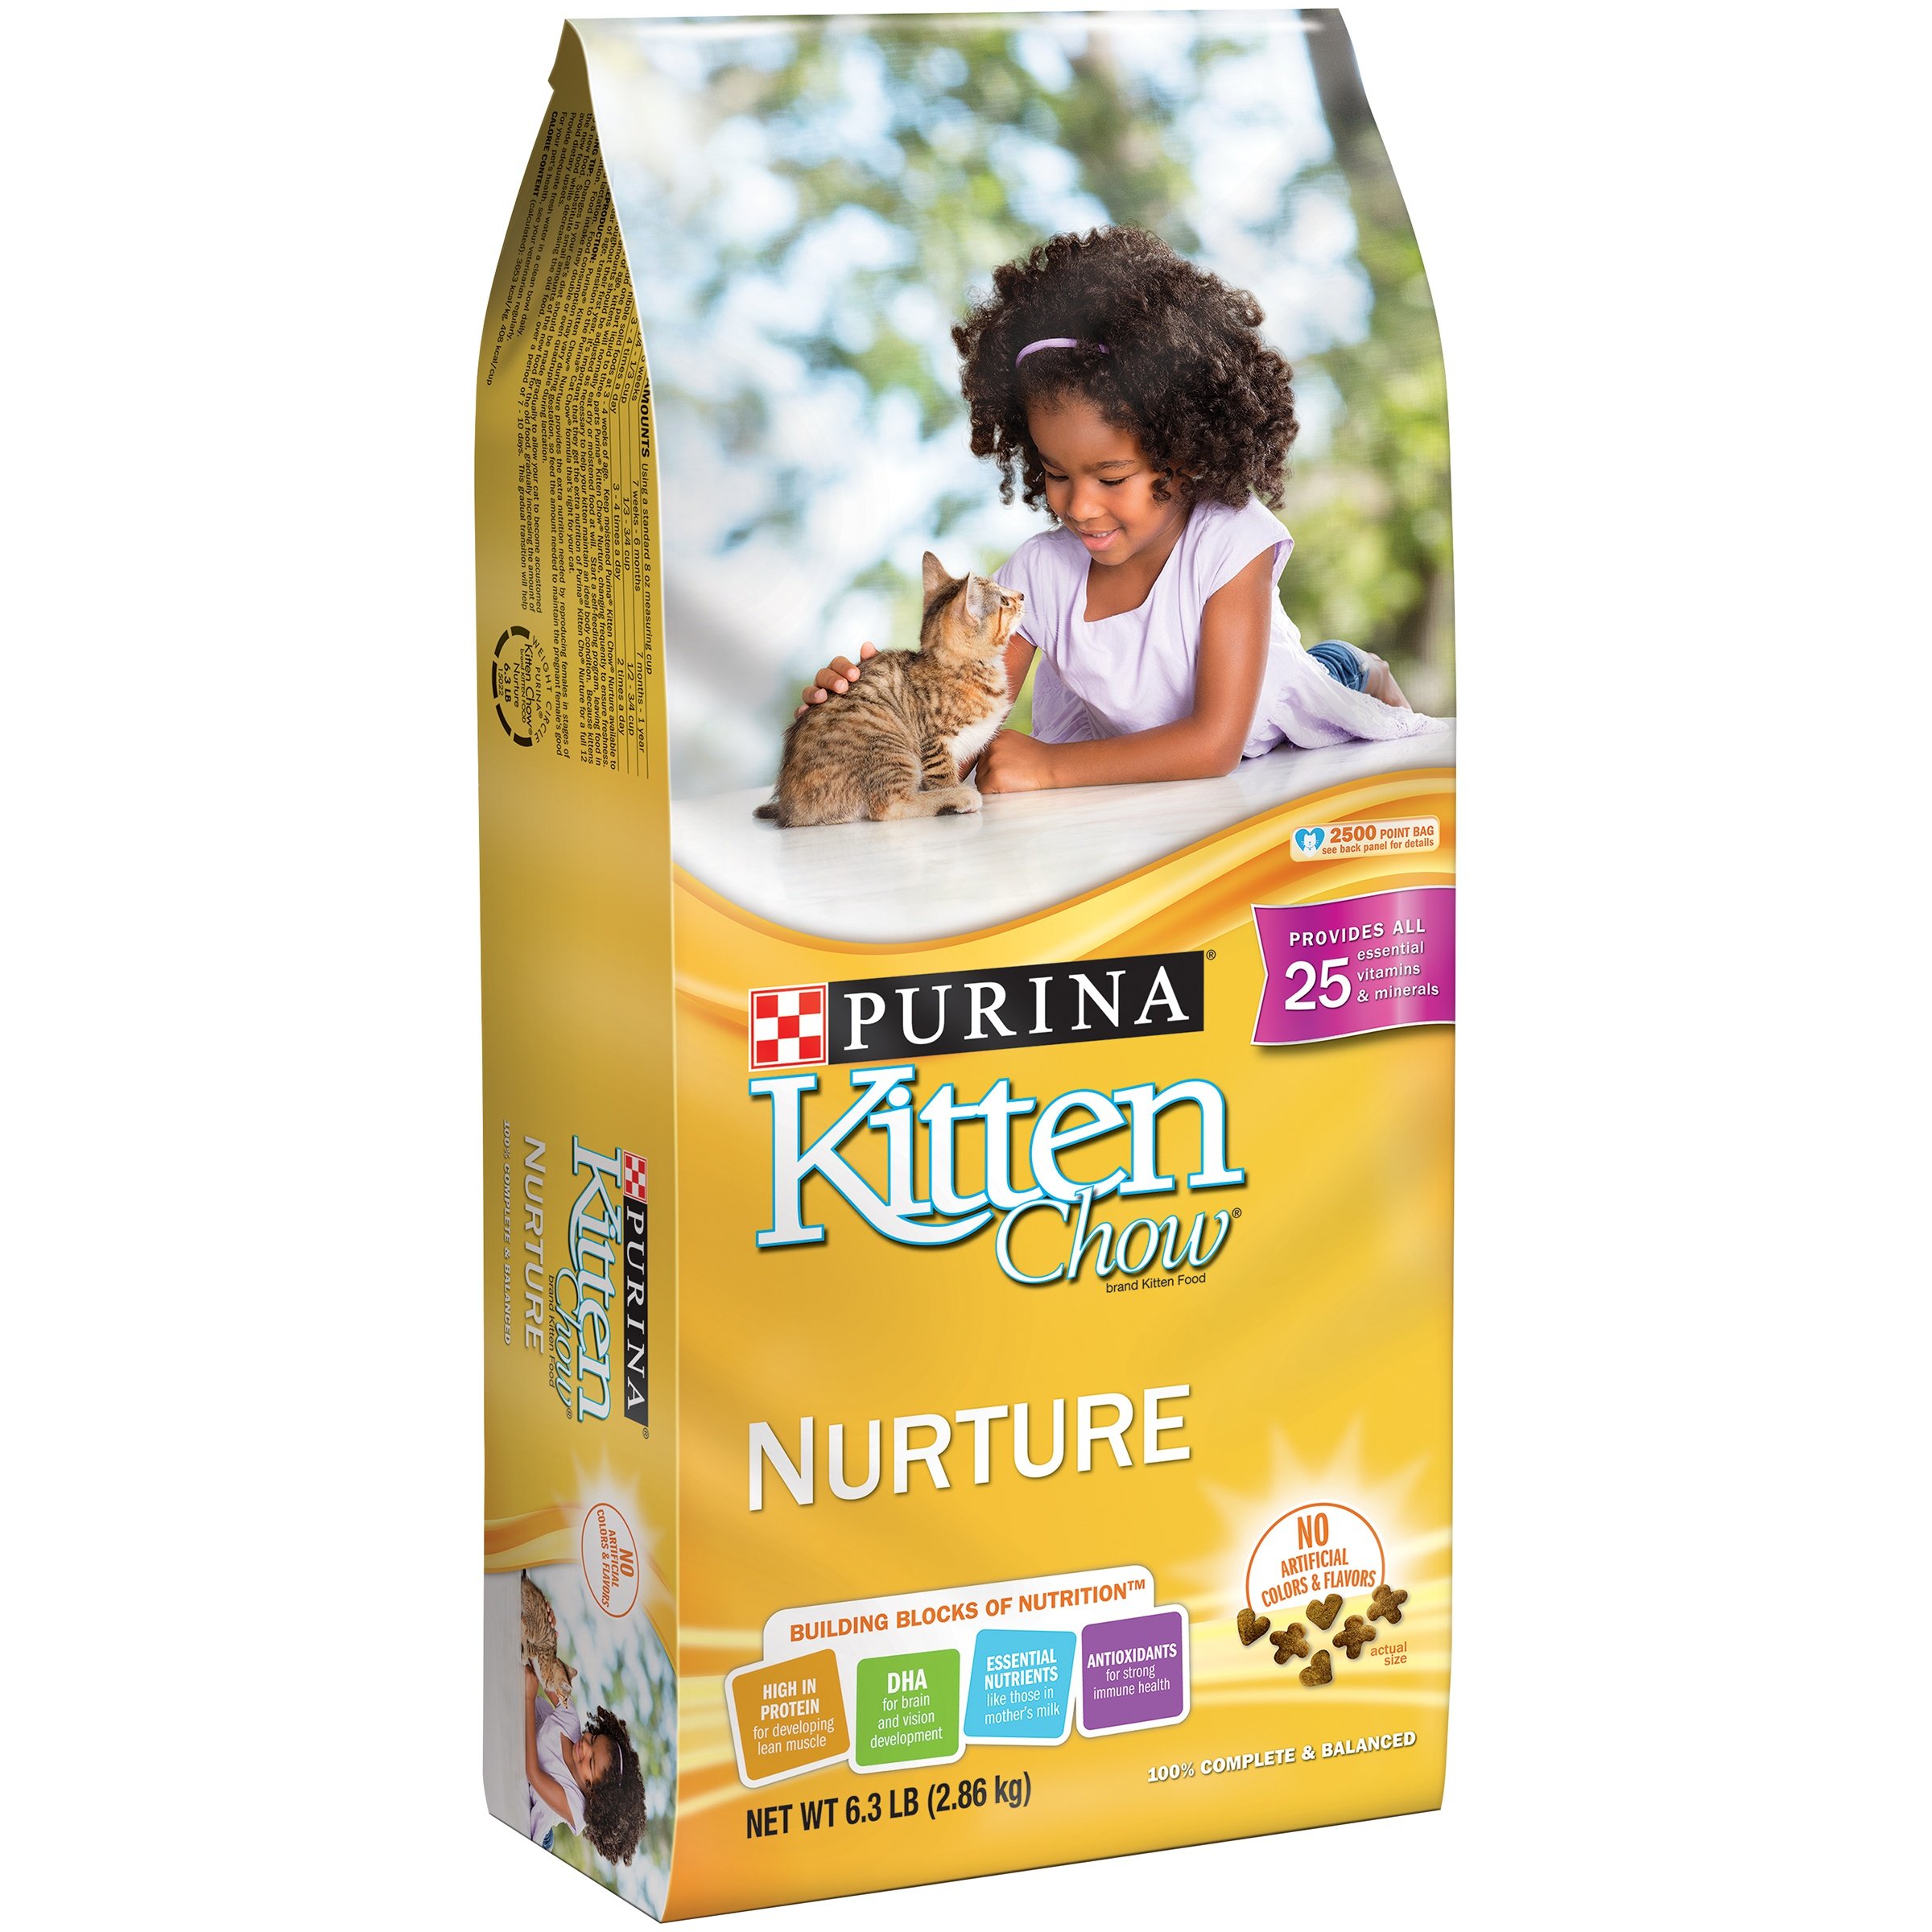 Purina Cat Chow Purina Kitten Chow Dry Kitten Food, Nurture Muscle + Brain Development - (4) 6.3 lb. Bags